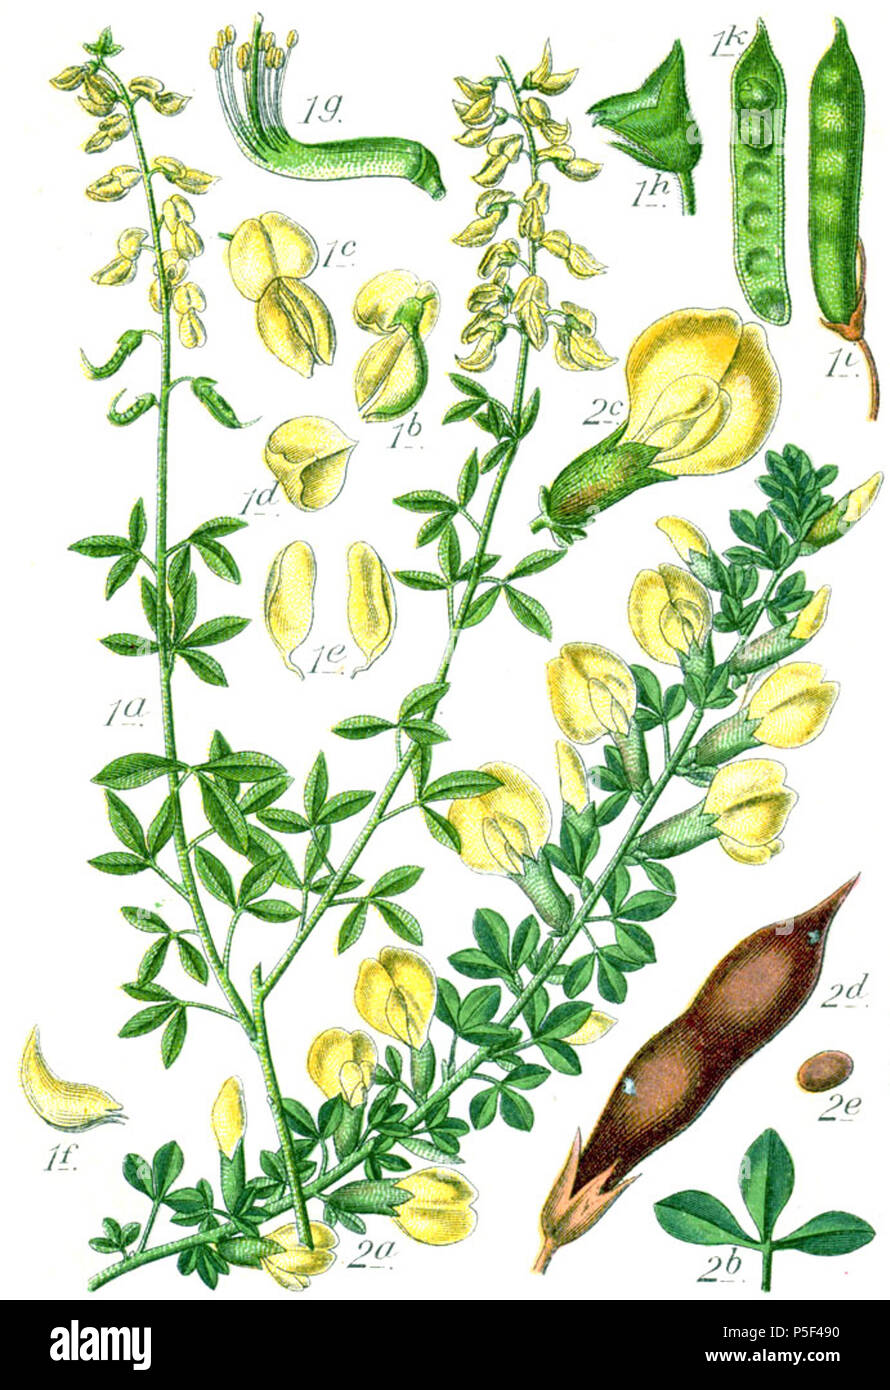 N/A. 1. Cytisus nigricans L. 2. FloraWeb.de: Regensburger Geißklee, Chamaecytisus ratisbonensis (Schaeff.) Rothm. Unresolved names: Genista nigricans (L.) E.H.L.Krause, Genista ratisbonensis (Schaeff.) E.H.L.Krause Original Caption 1. Schwarzer Geissklee, Genista nigricans 2. Regensburger Geissklee, G. ratisbonensis . 1796. Johann Georg Sturm (Painter: Jacob Sturm) 544 Faboideae spp Sturm26 Stock Photo